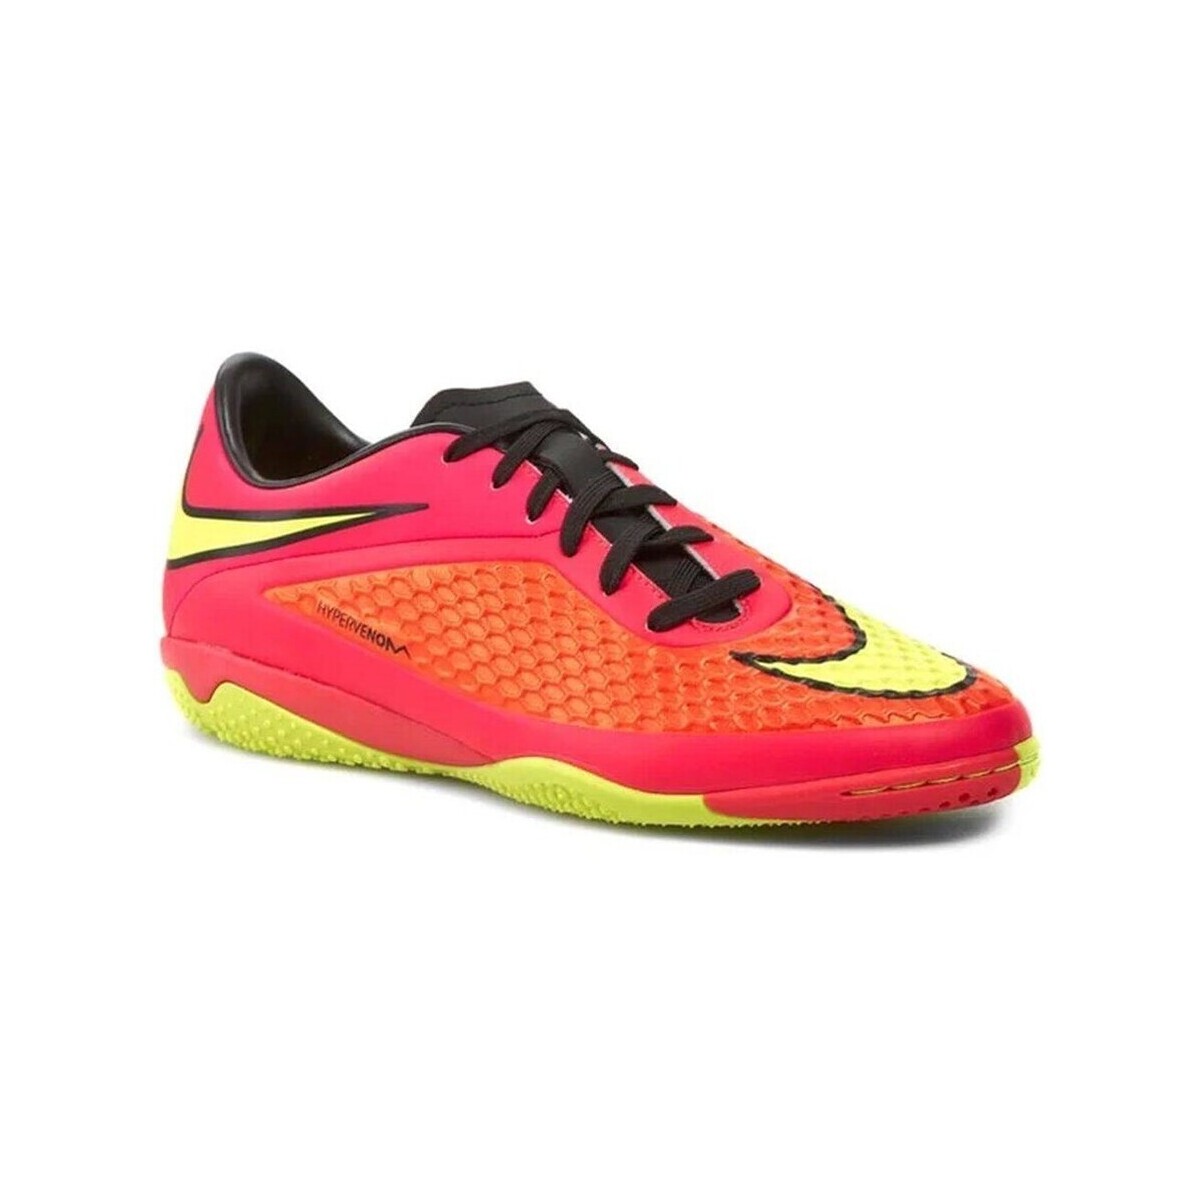 Shoes Men Football shoes Nike BUTYHYPPHELONIC599849690 Red, Orange